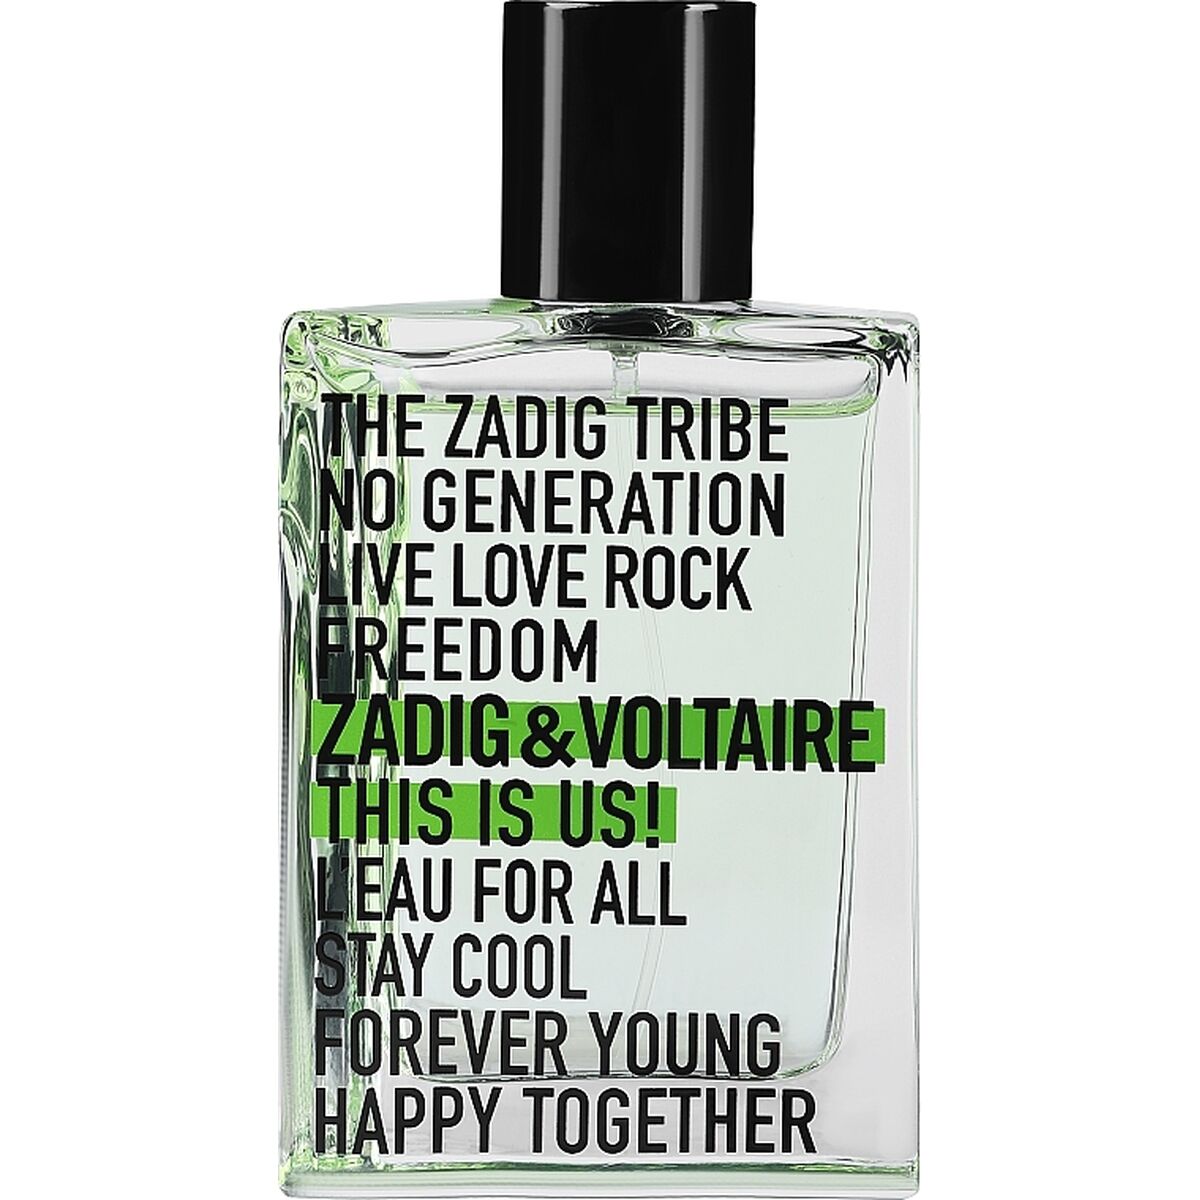 Uniseks Parfum Zadig & Voltaire EDT This is Us! L'Eau for All 50 ml